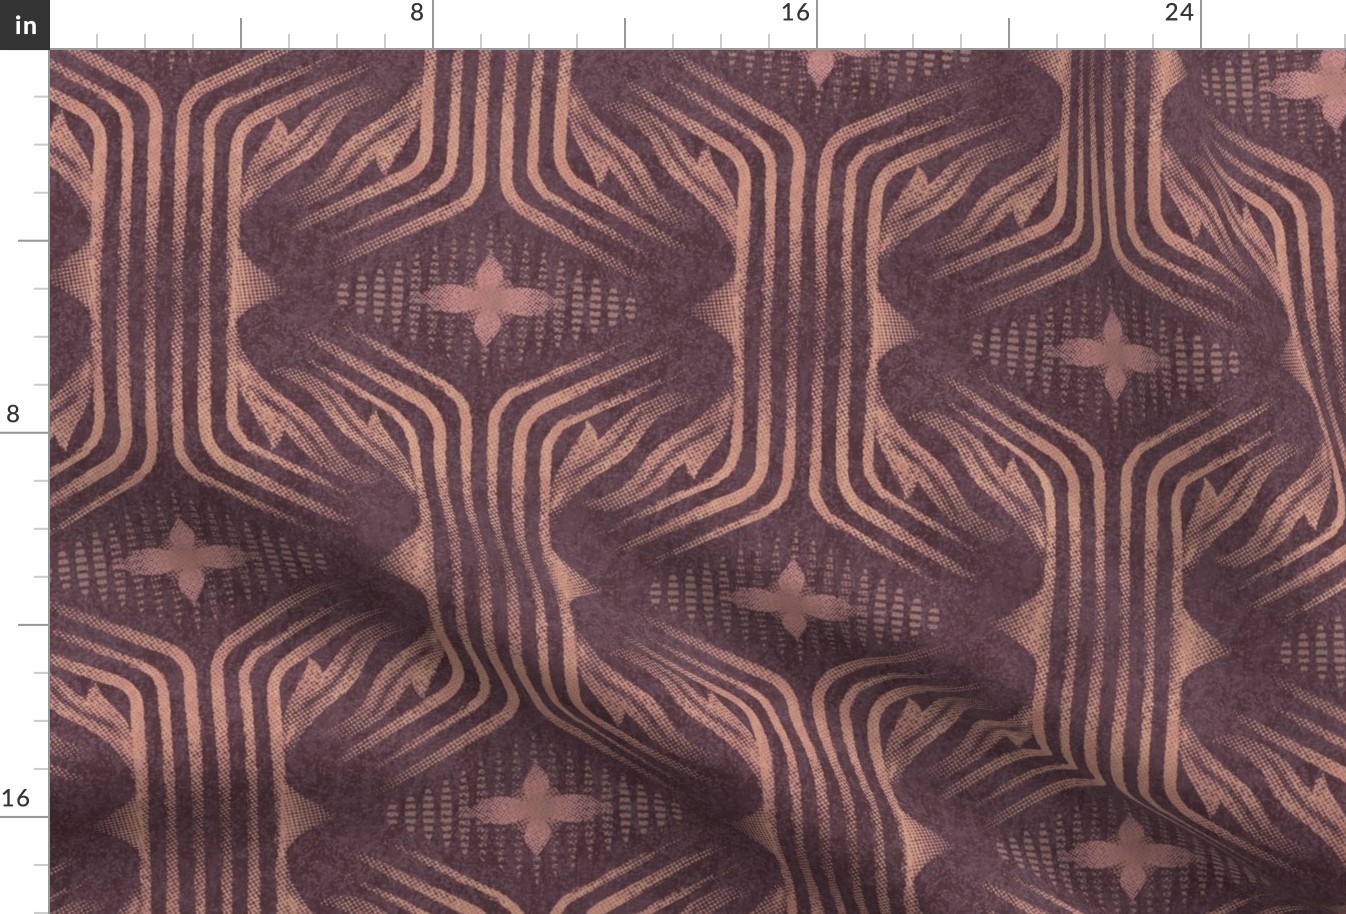 Interweaving lines textured elegant geometric with hexagons and diamonds - moody plum and rose, dark red-purple - large